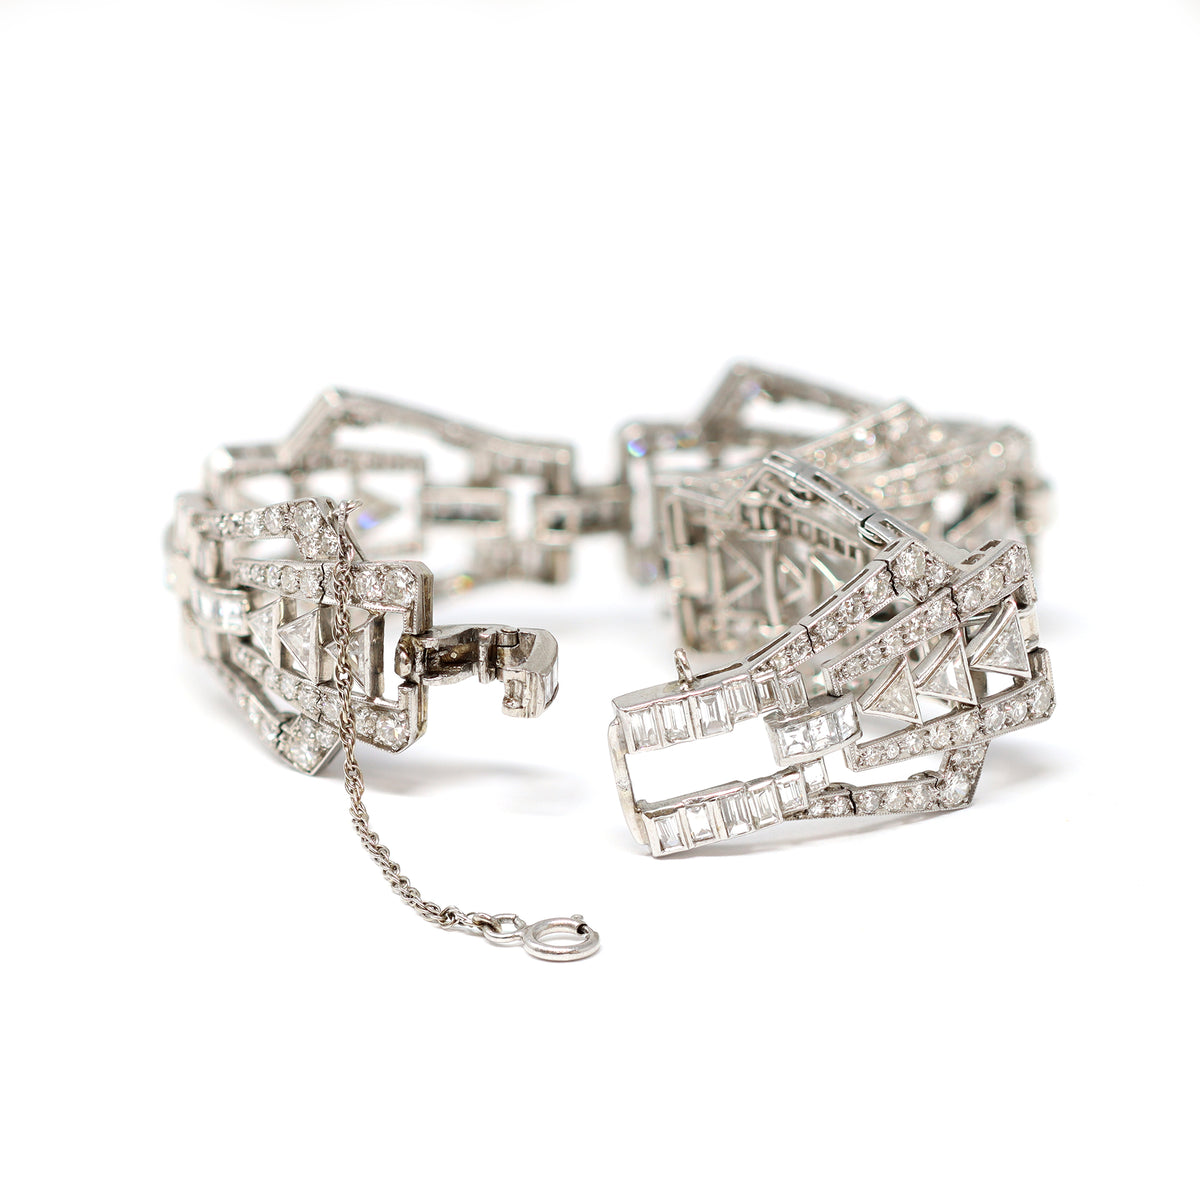 Circa 1925 Art Deco Diamond and Platinum Bracelet open clasp view